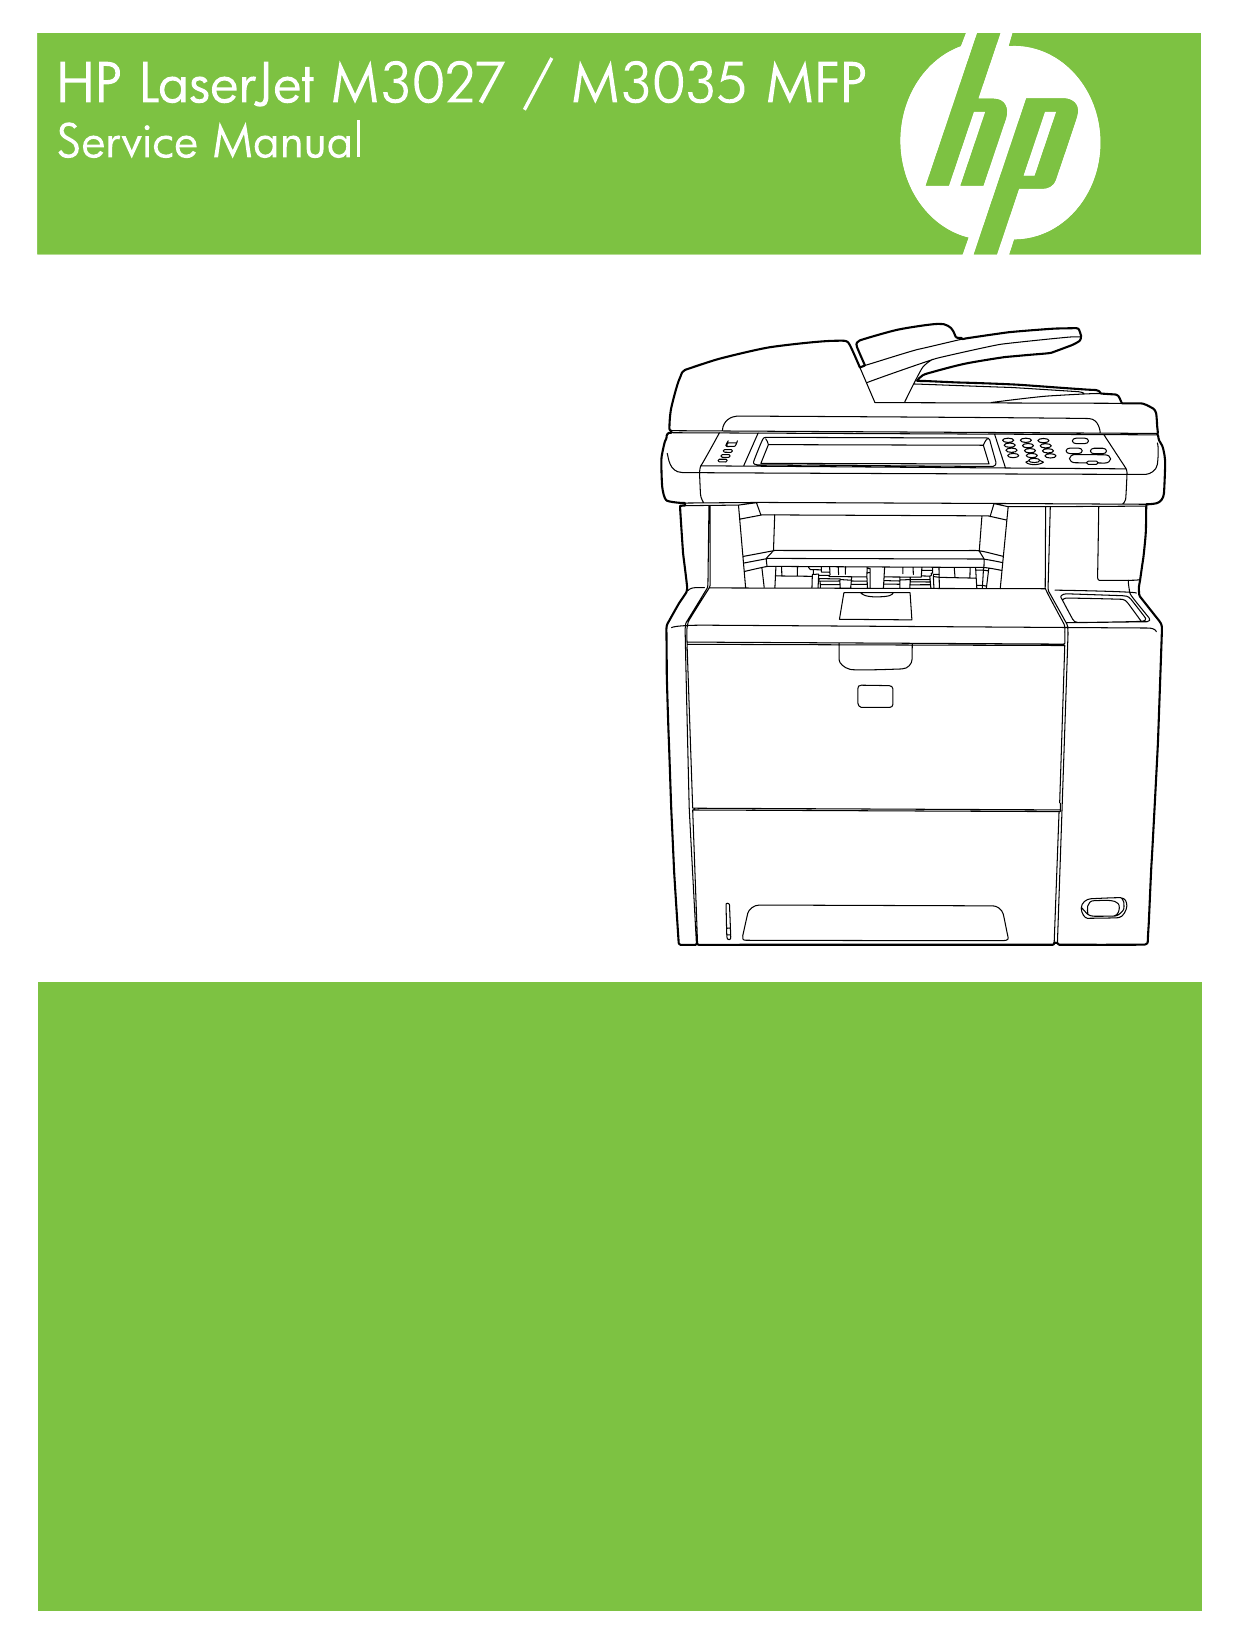 HP LaserJet M3027, M3035 multifunction printers service guide Preview image 6